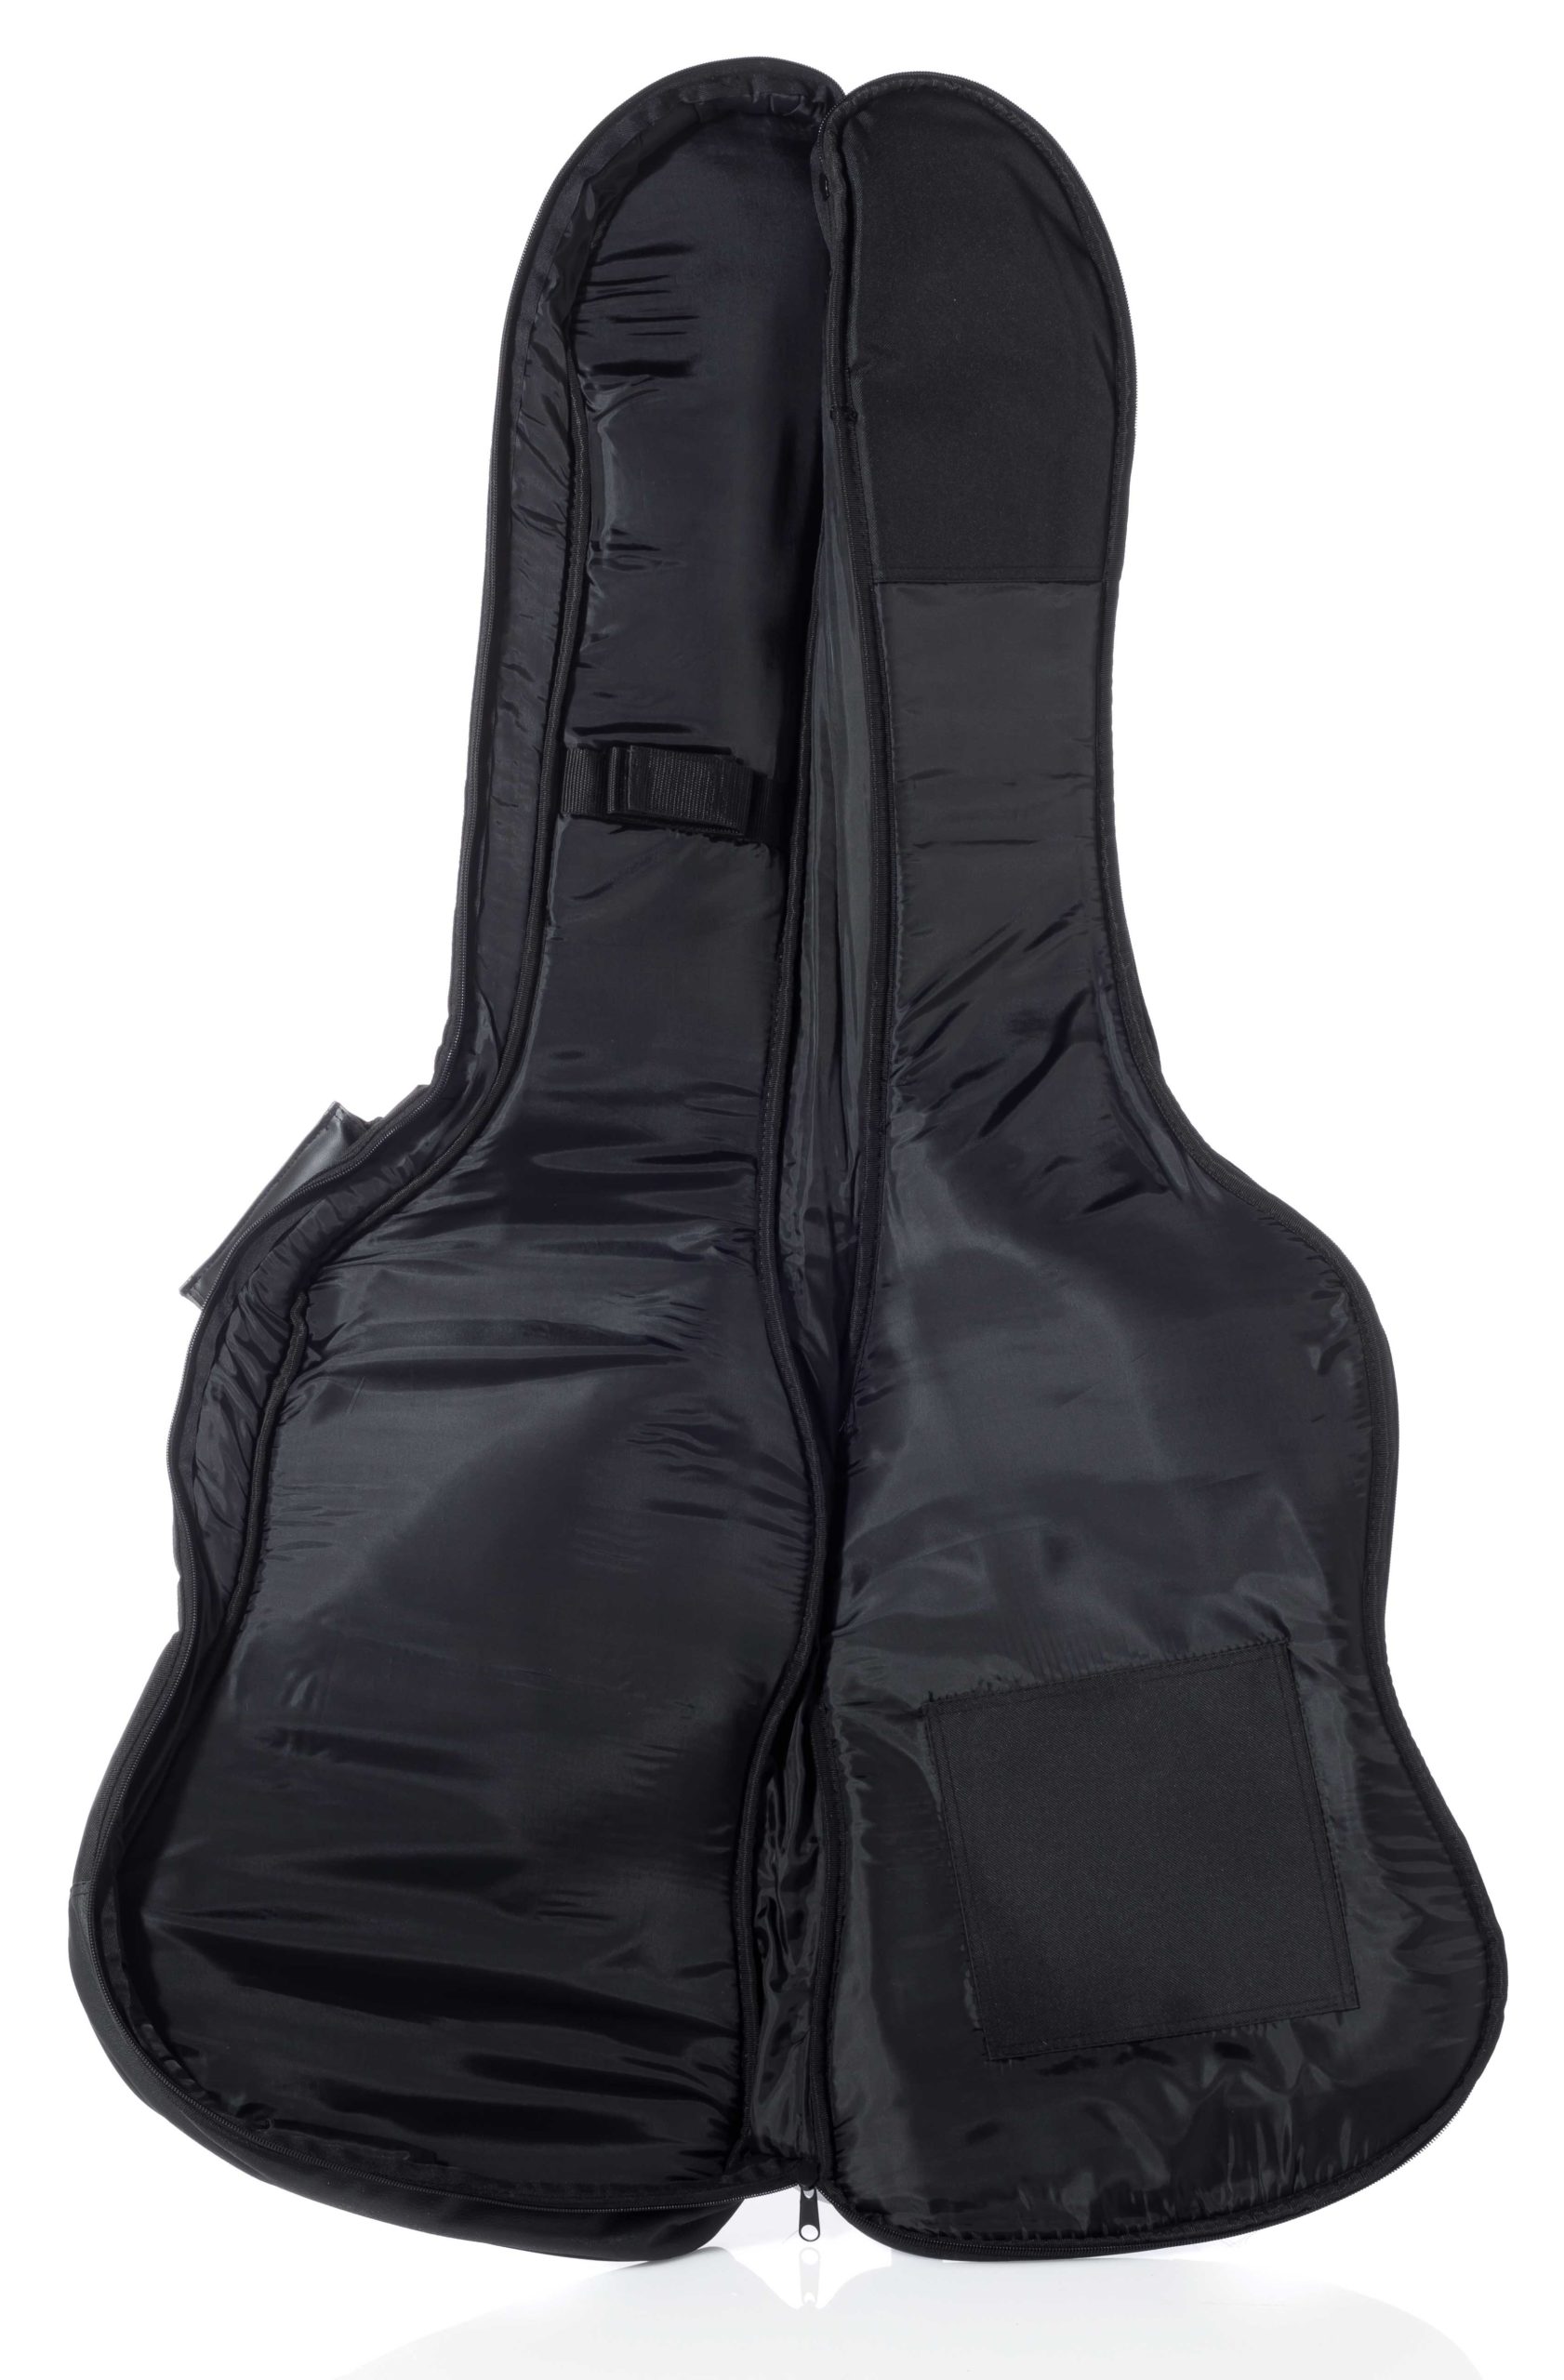 bag320eg-borsa-virtuoso-per-chitarra-elettrica-antistrappo